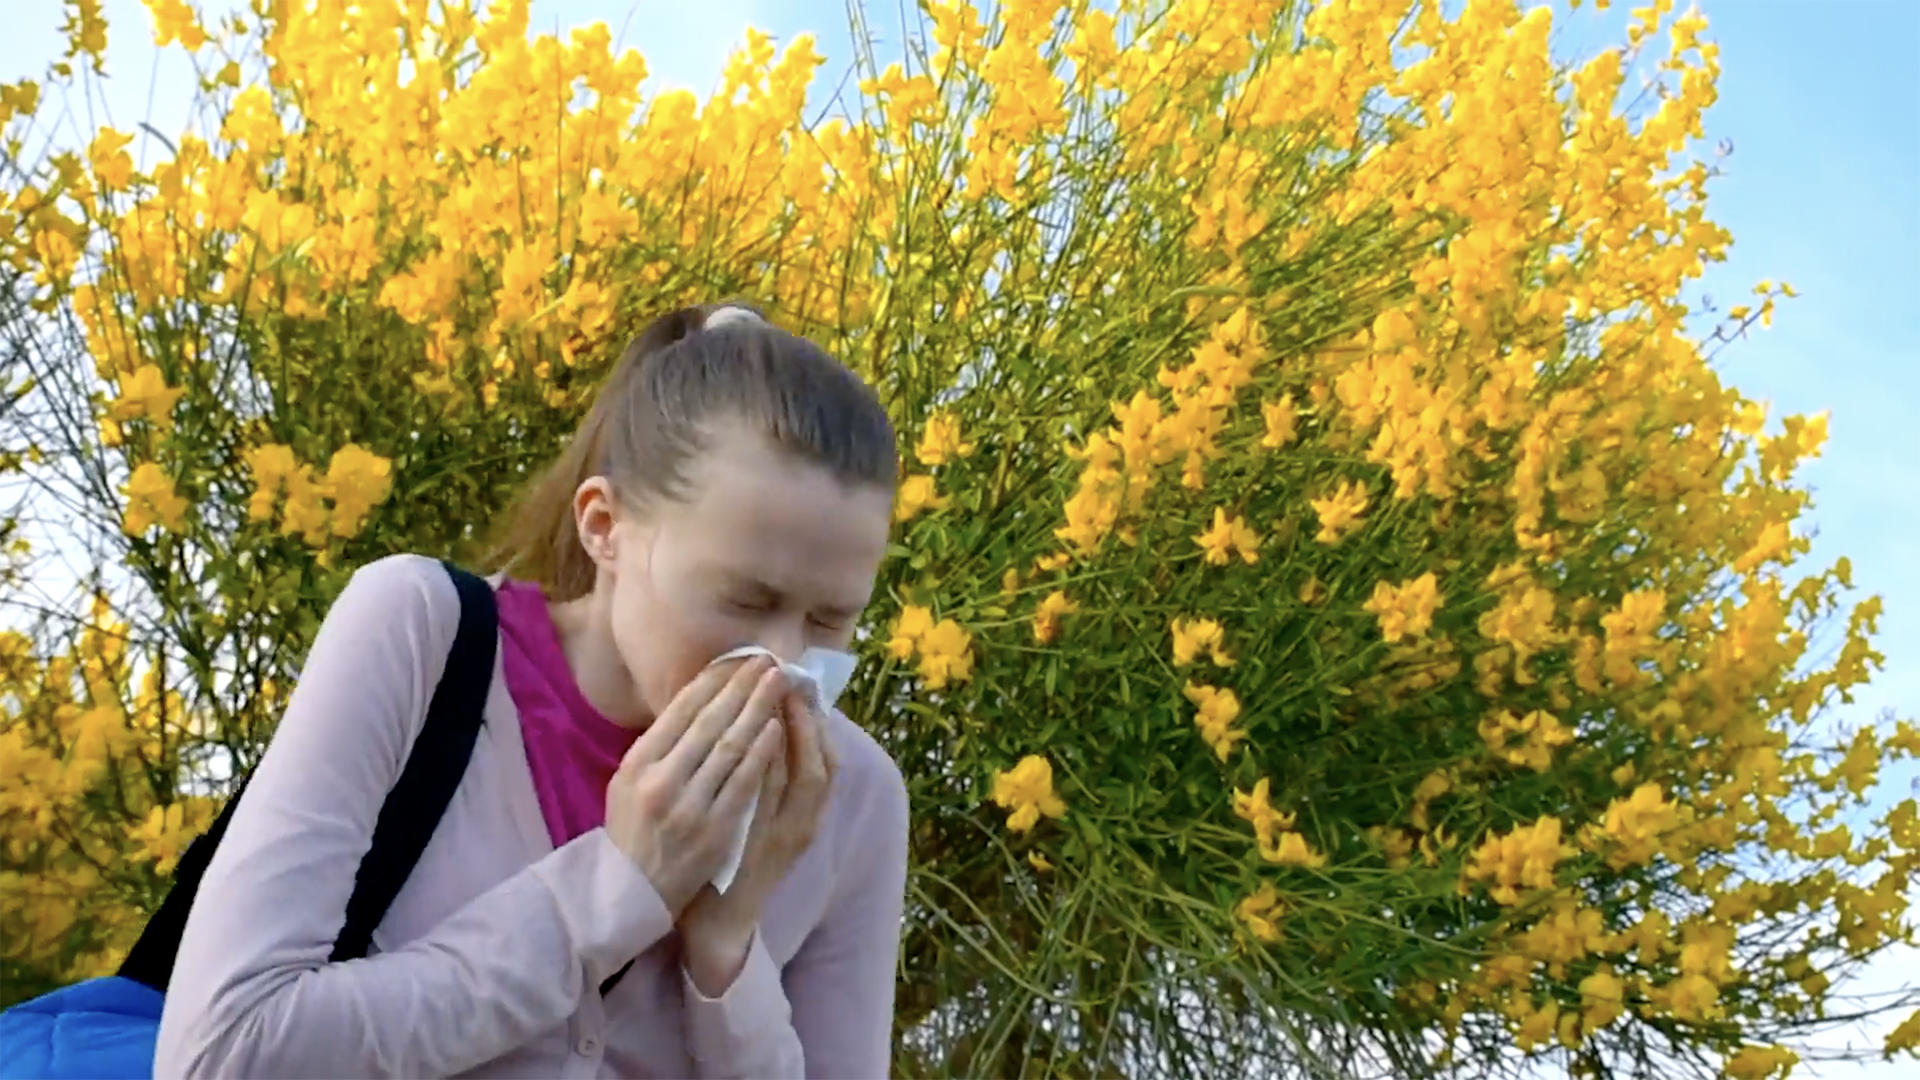 Suffering allergies? Scientists say pollen counts may be deceiving.